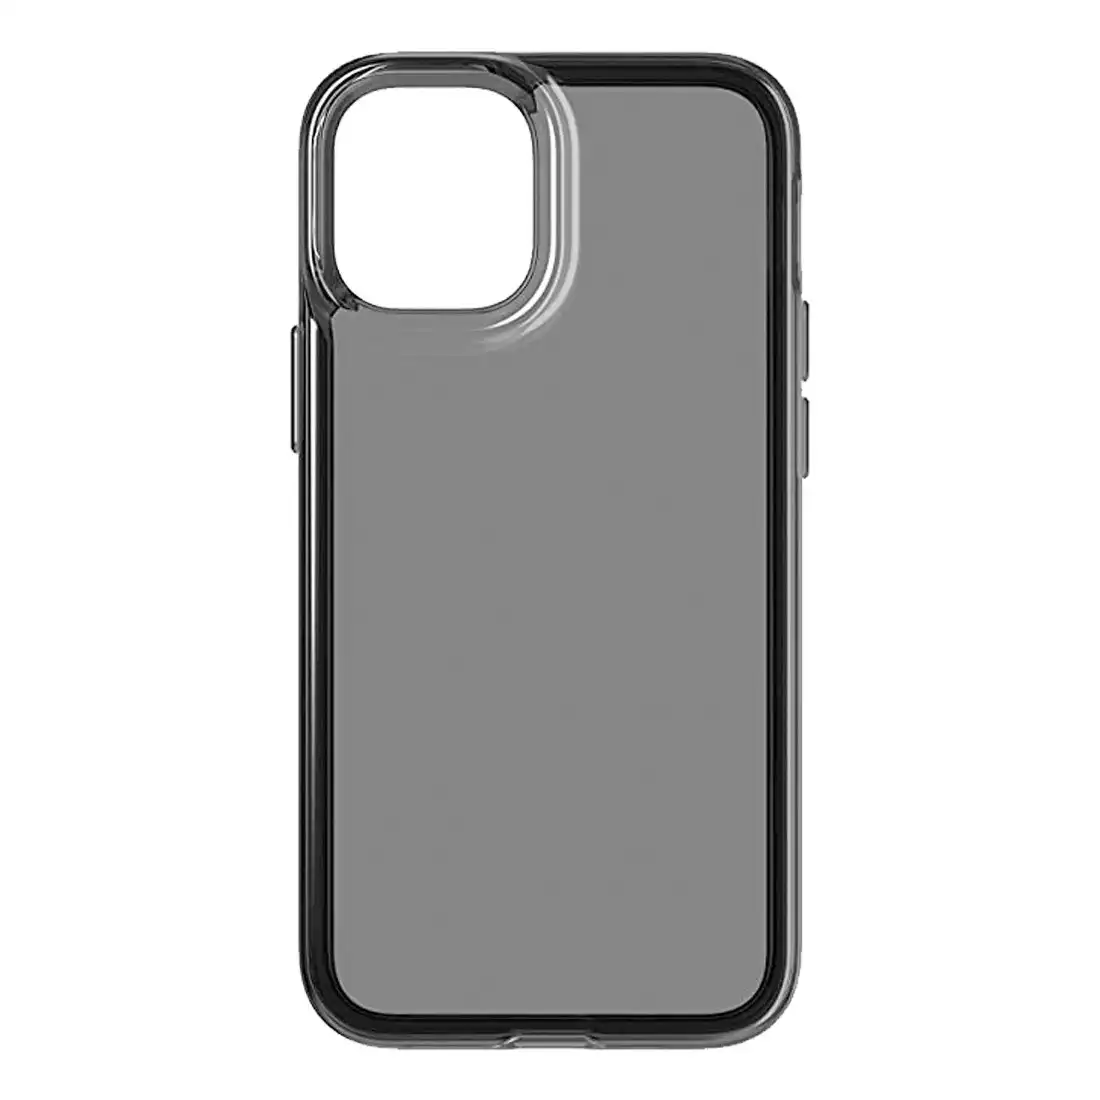 Tech21 Evo Tint Case for iPhone 12 mini T21-8358 - Carbon